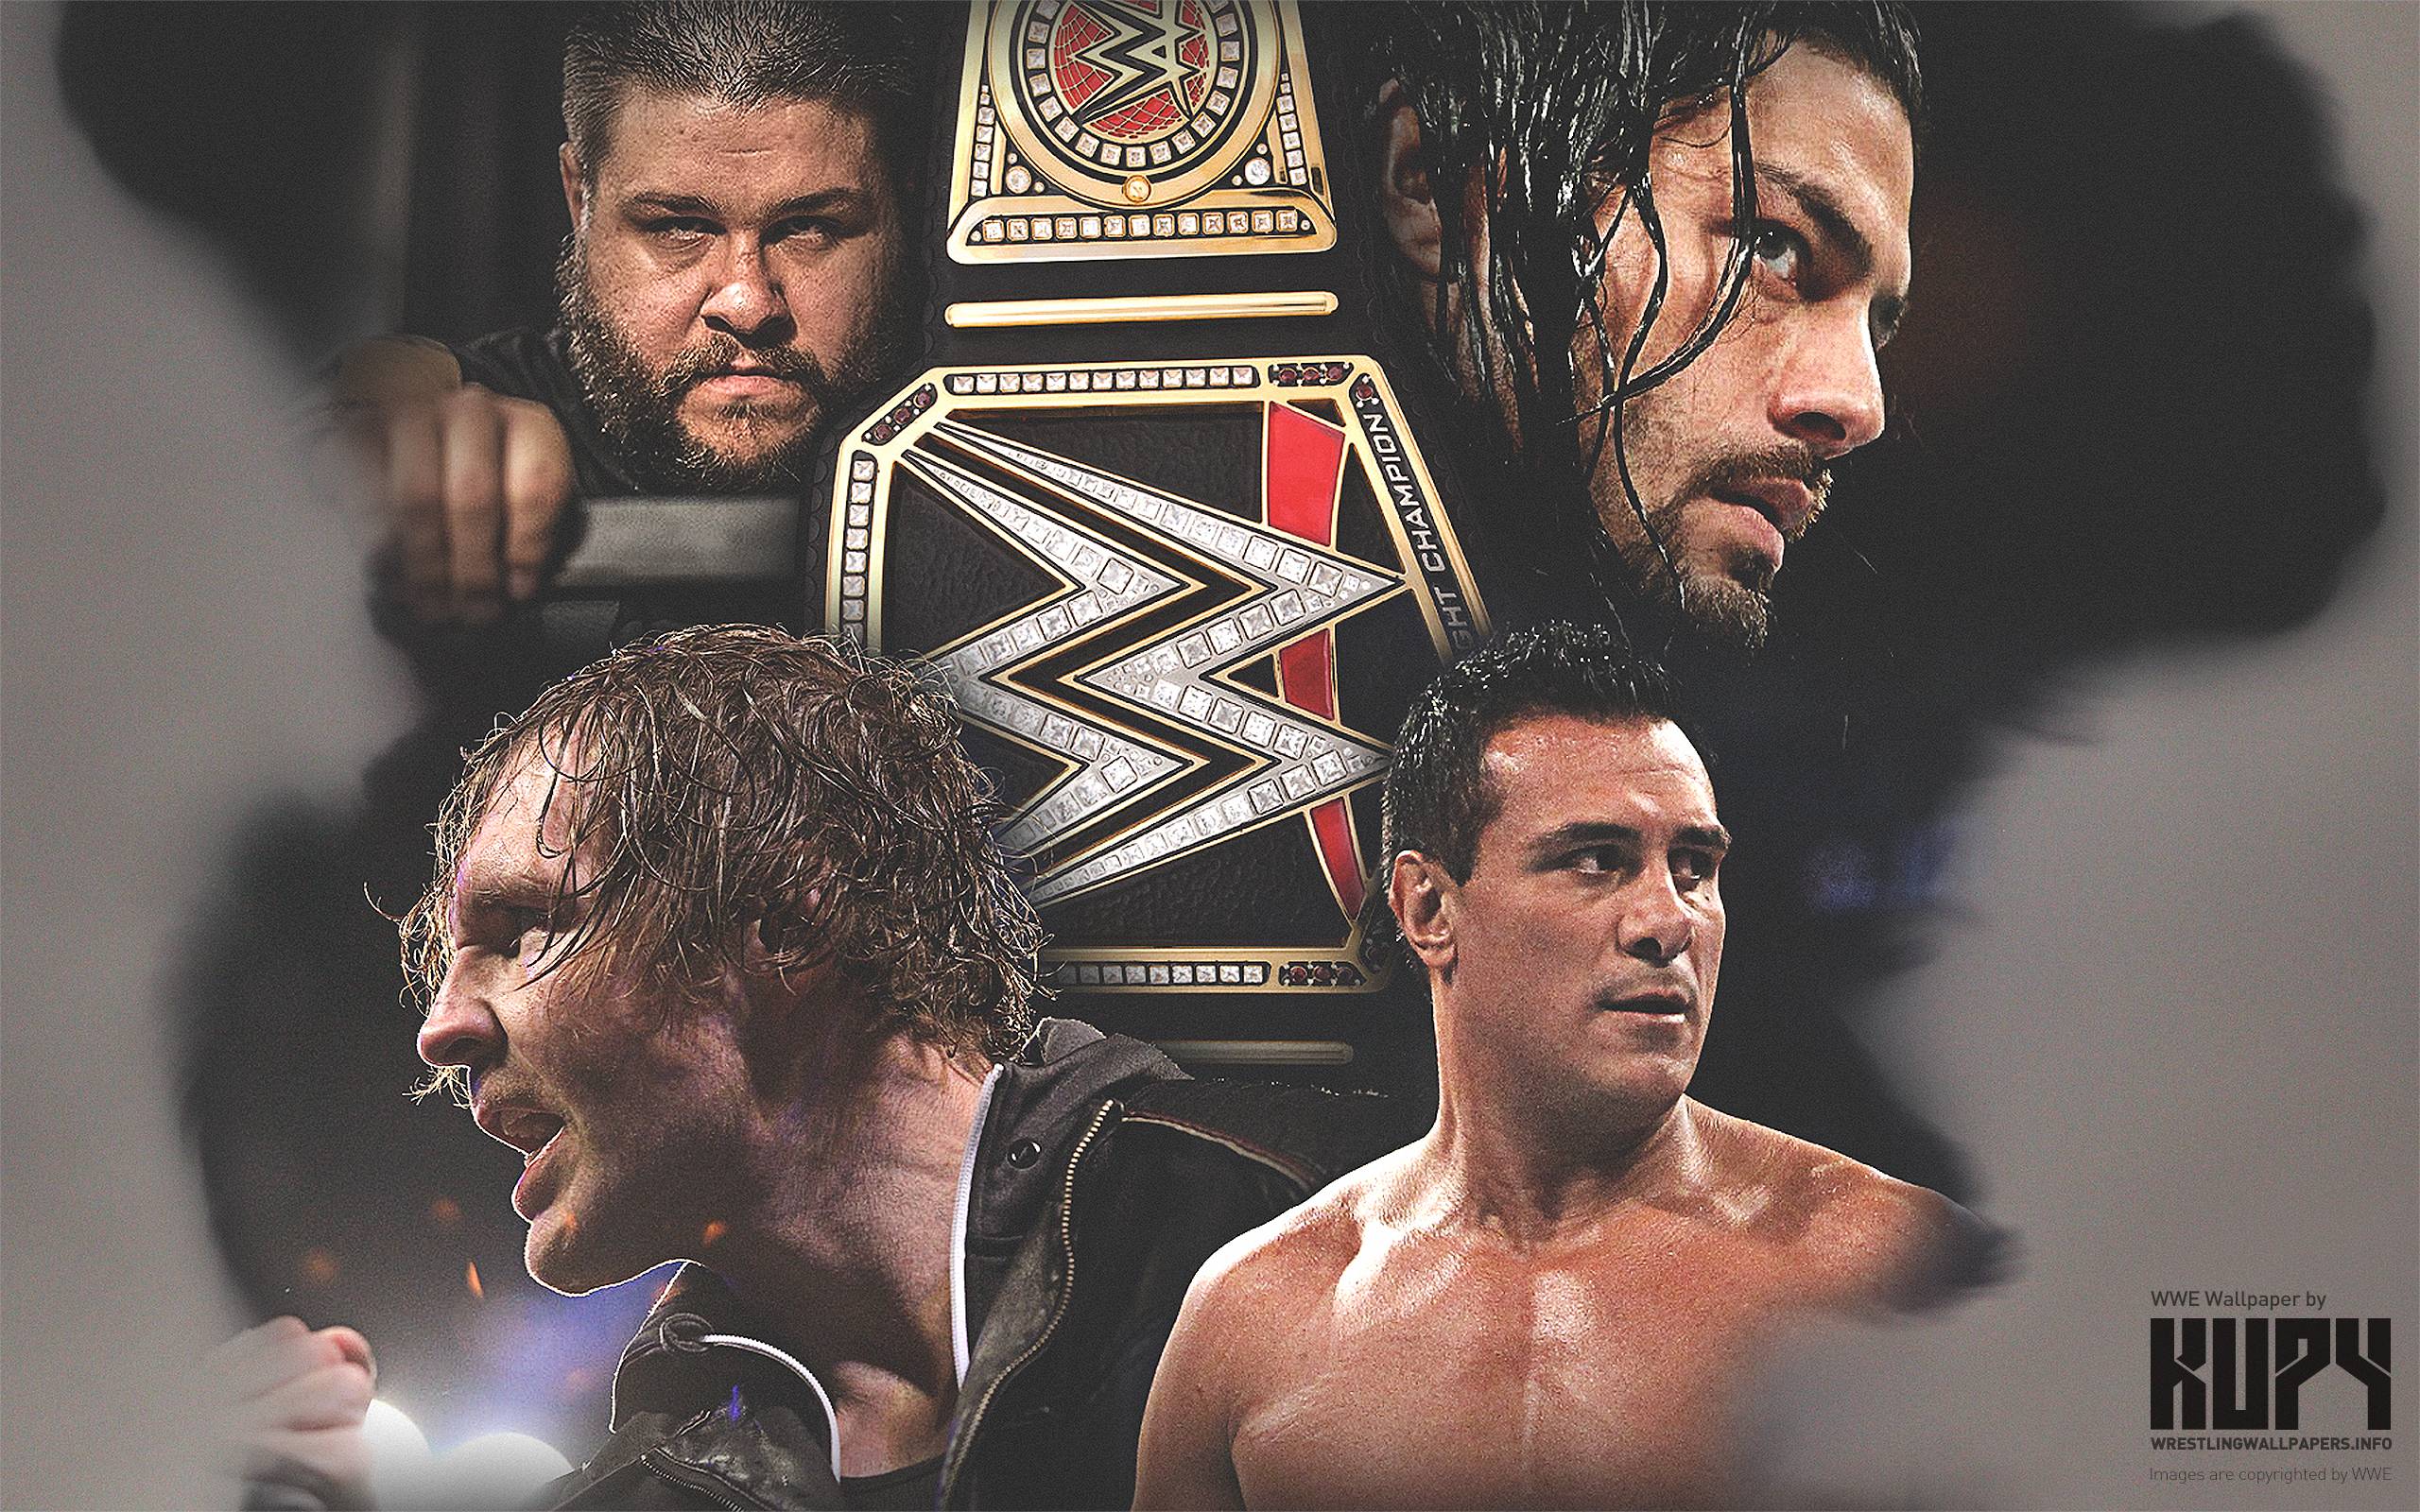 NEW Survivor Series 2015 WWEWHC Tournament wallpaper!